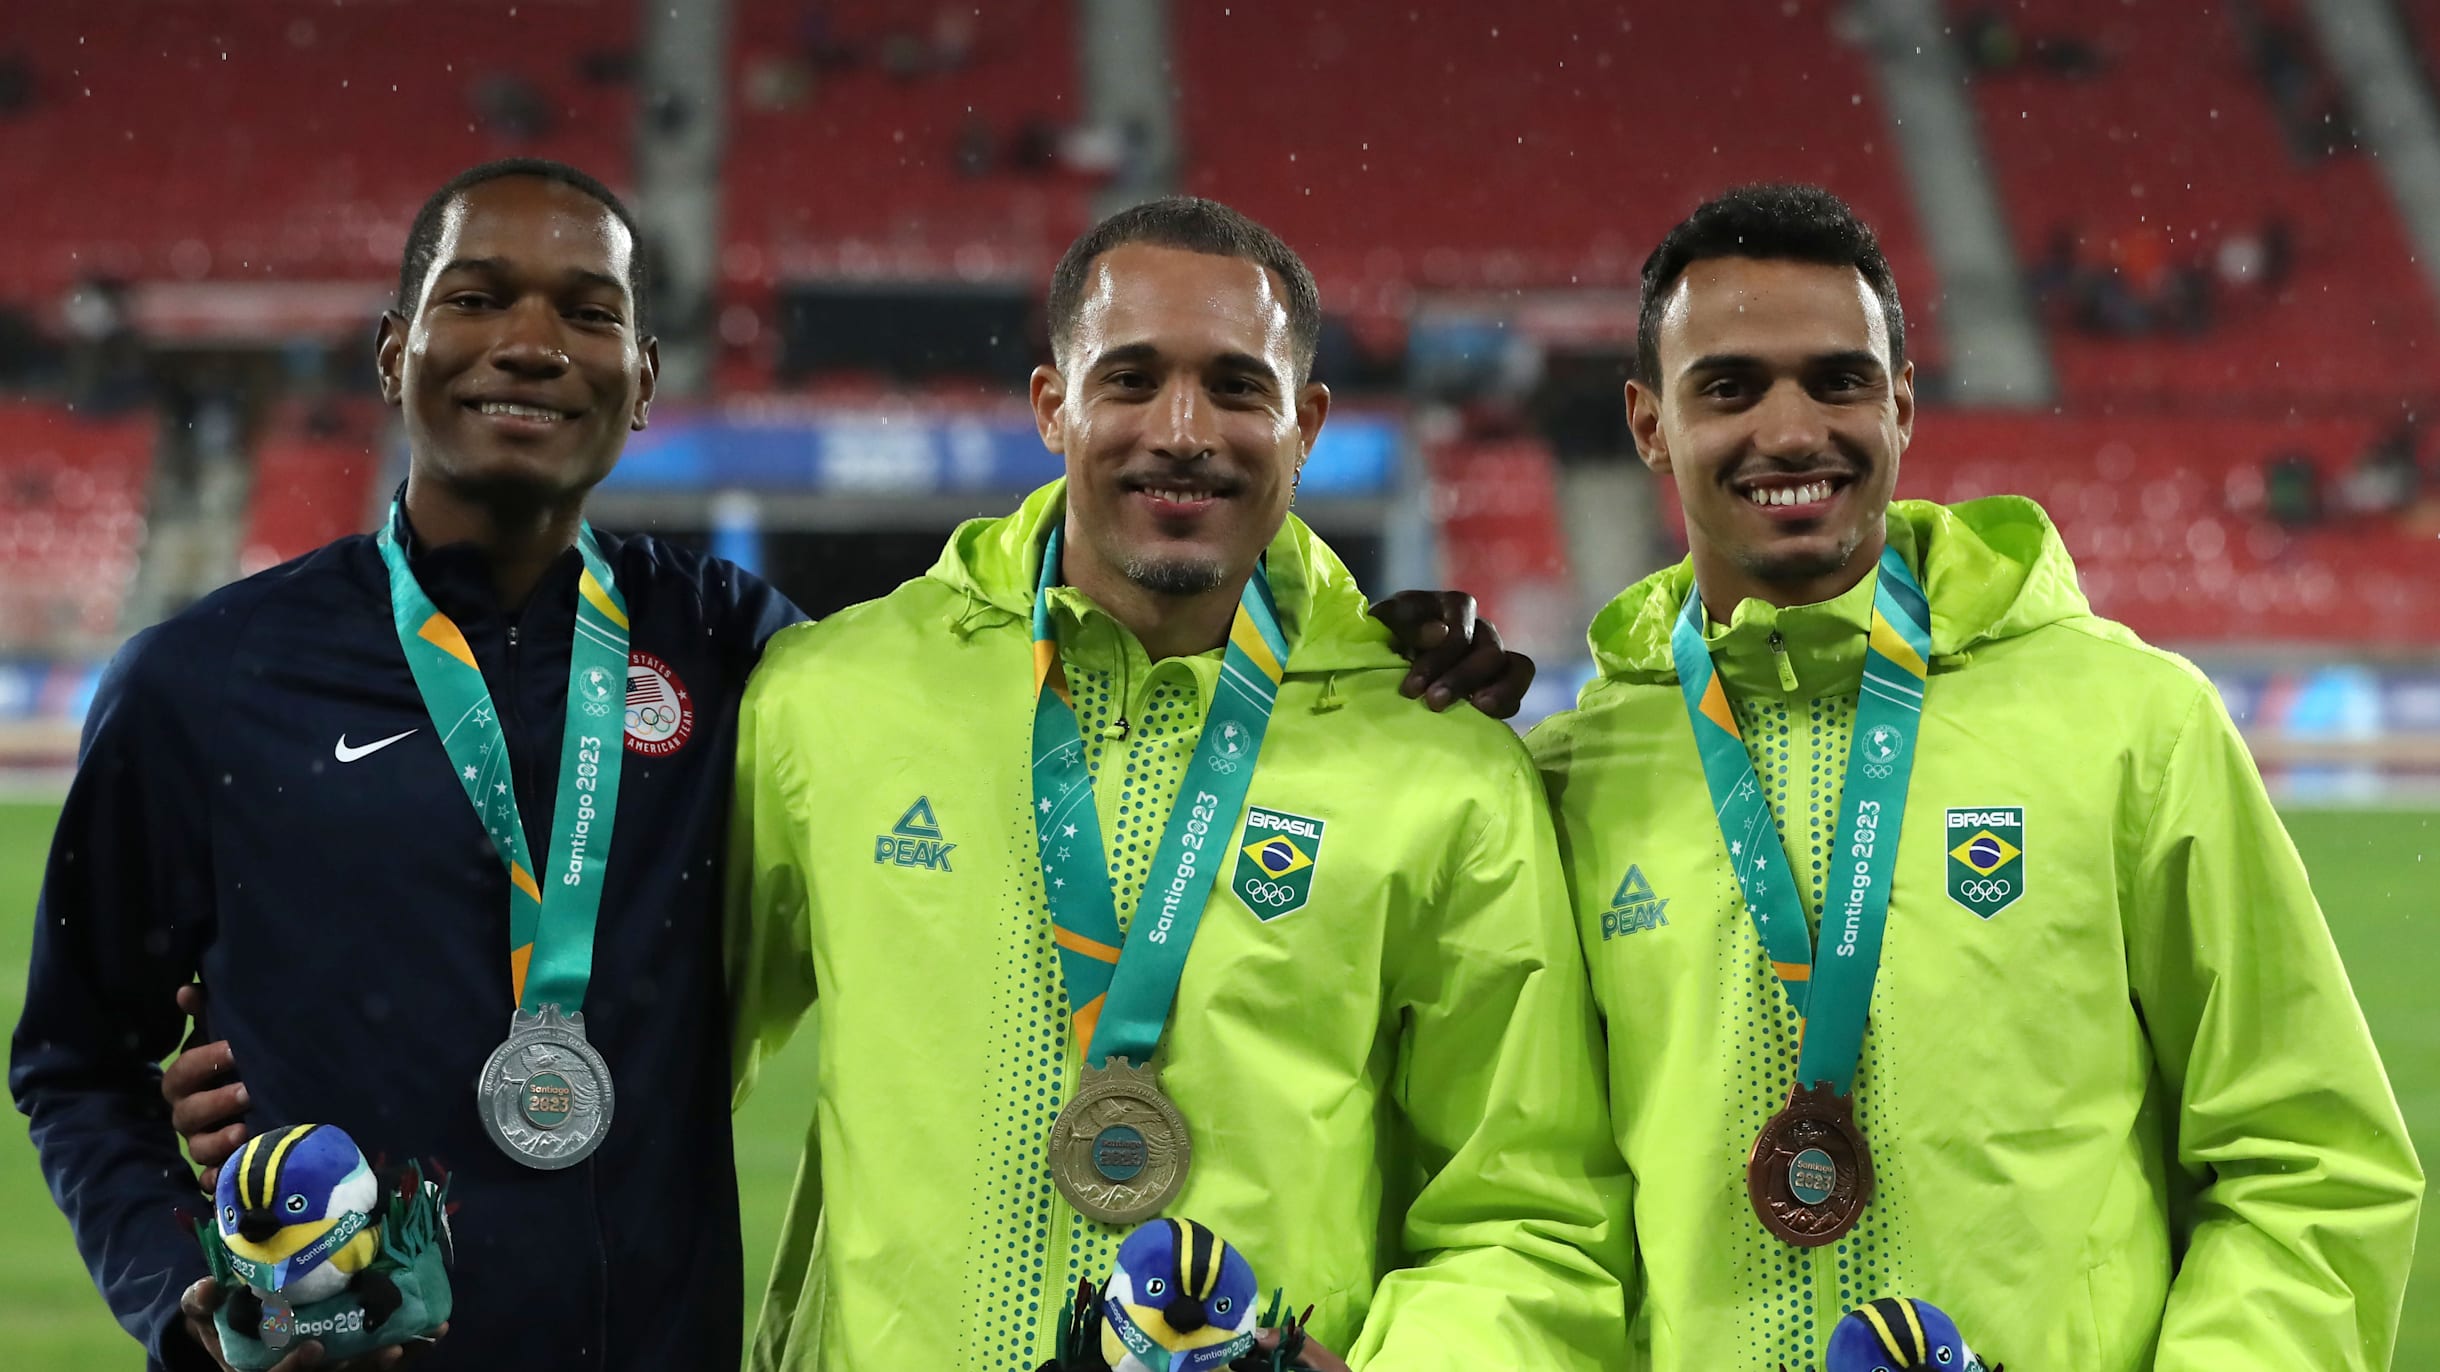 Atleta de Maringá conquista ouro para o Brasil nos Jogos Pan-Americanos 